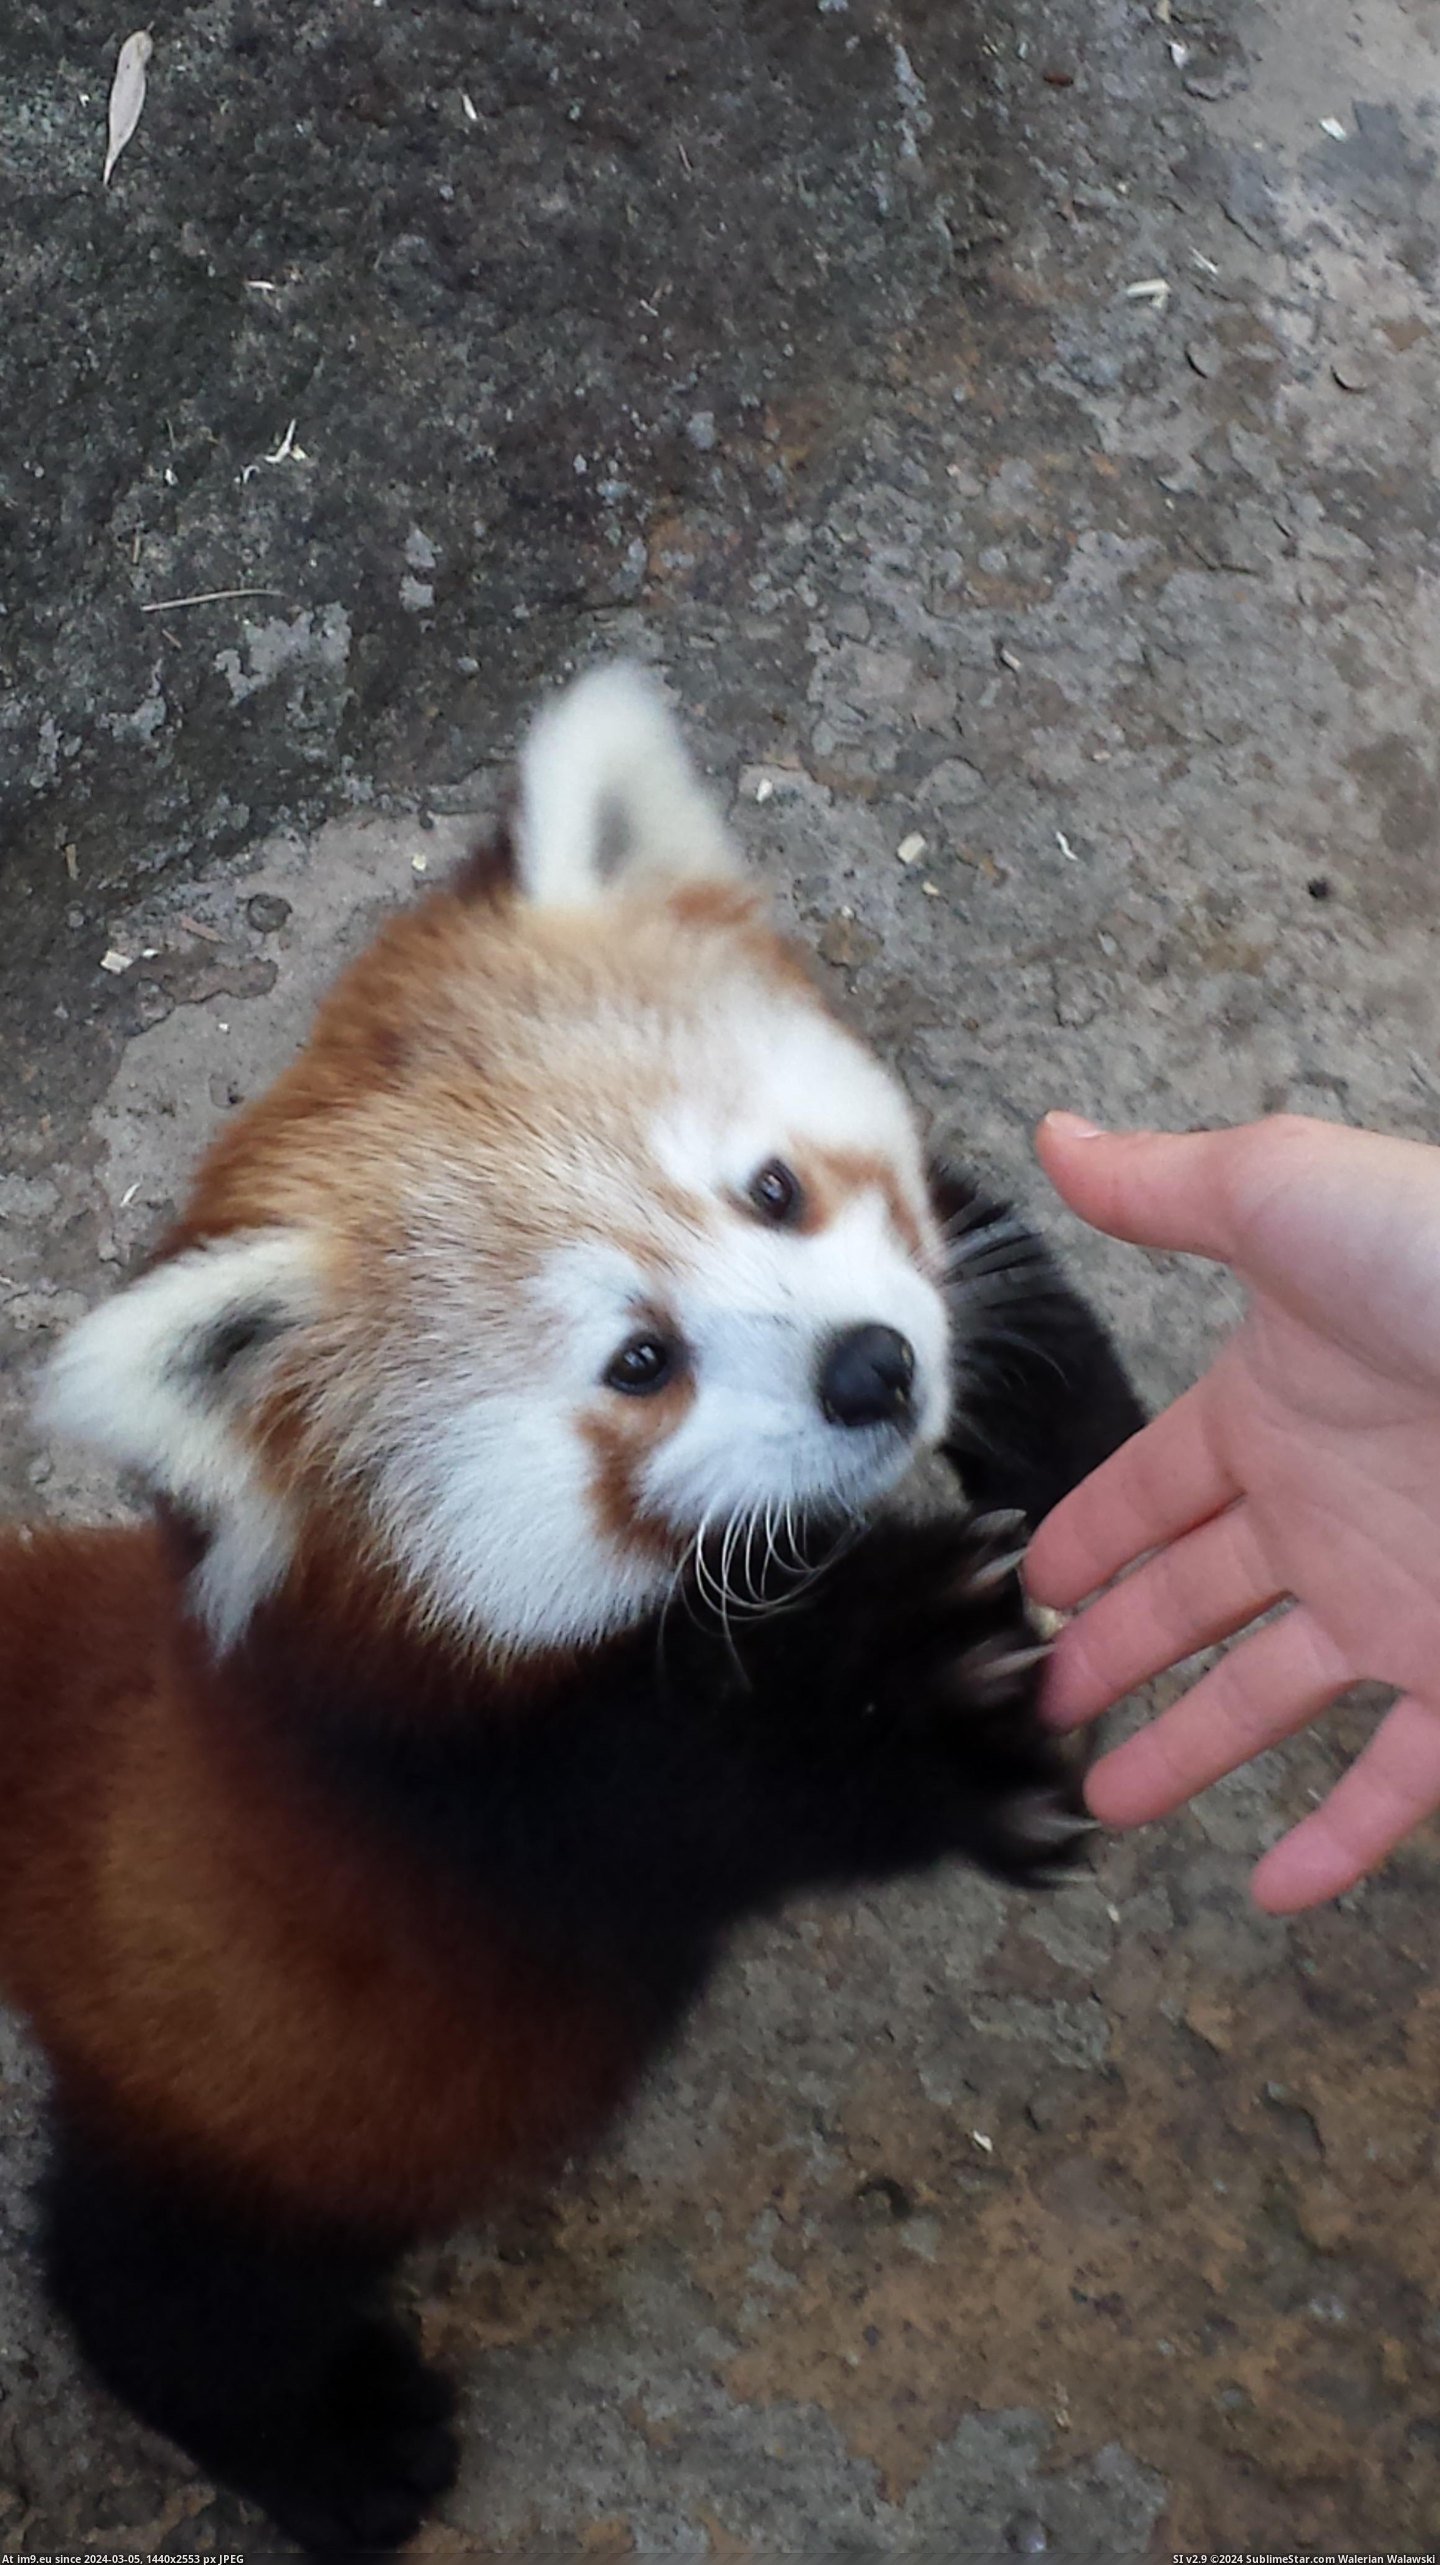 #Red #Girlfriend #Zoo #Panda #Shake #Got #Hands [Aww] My girlfriend got to shake hands with a red panda at the zoo! Pic. (Изображение из альбом My r/AWW favs))